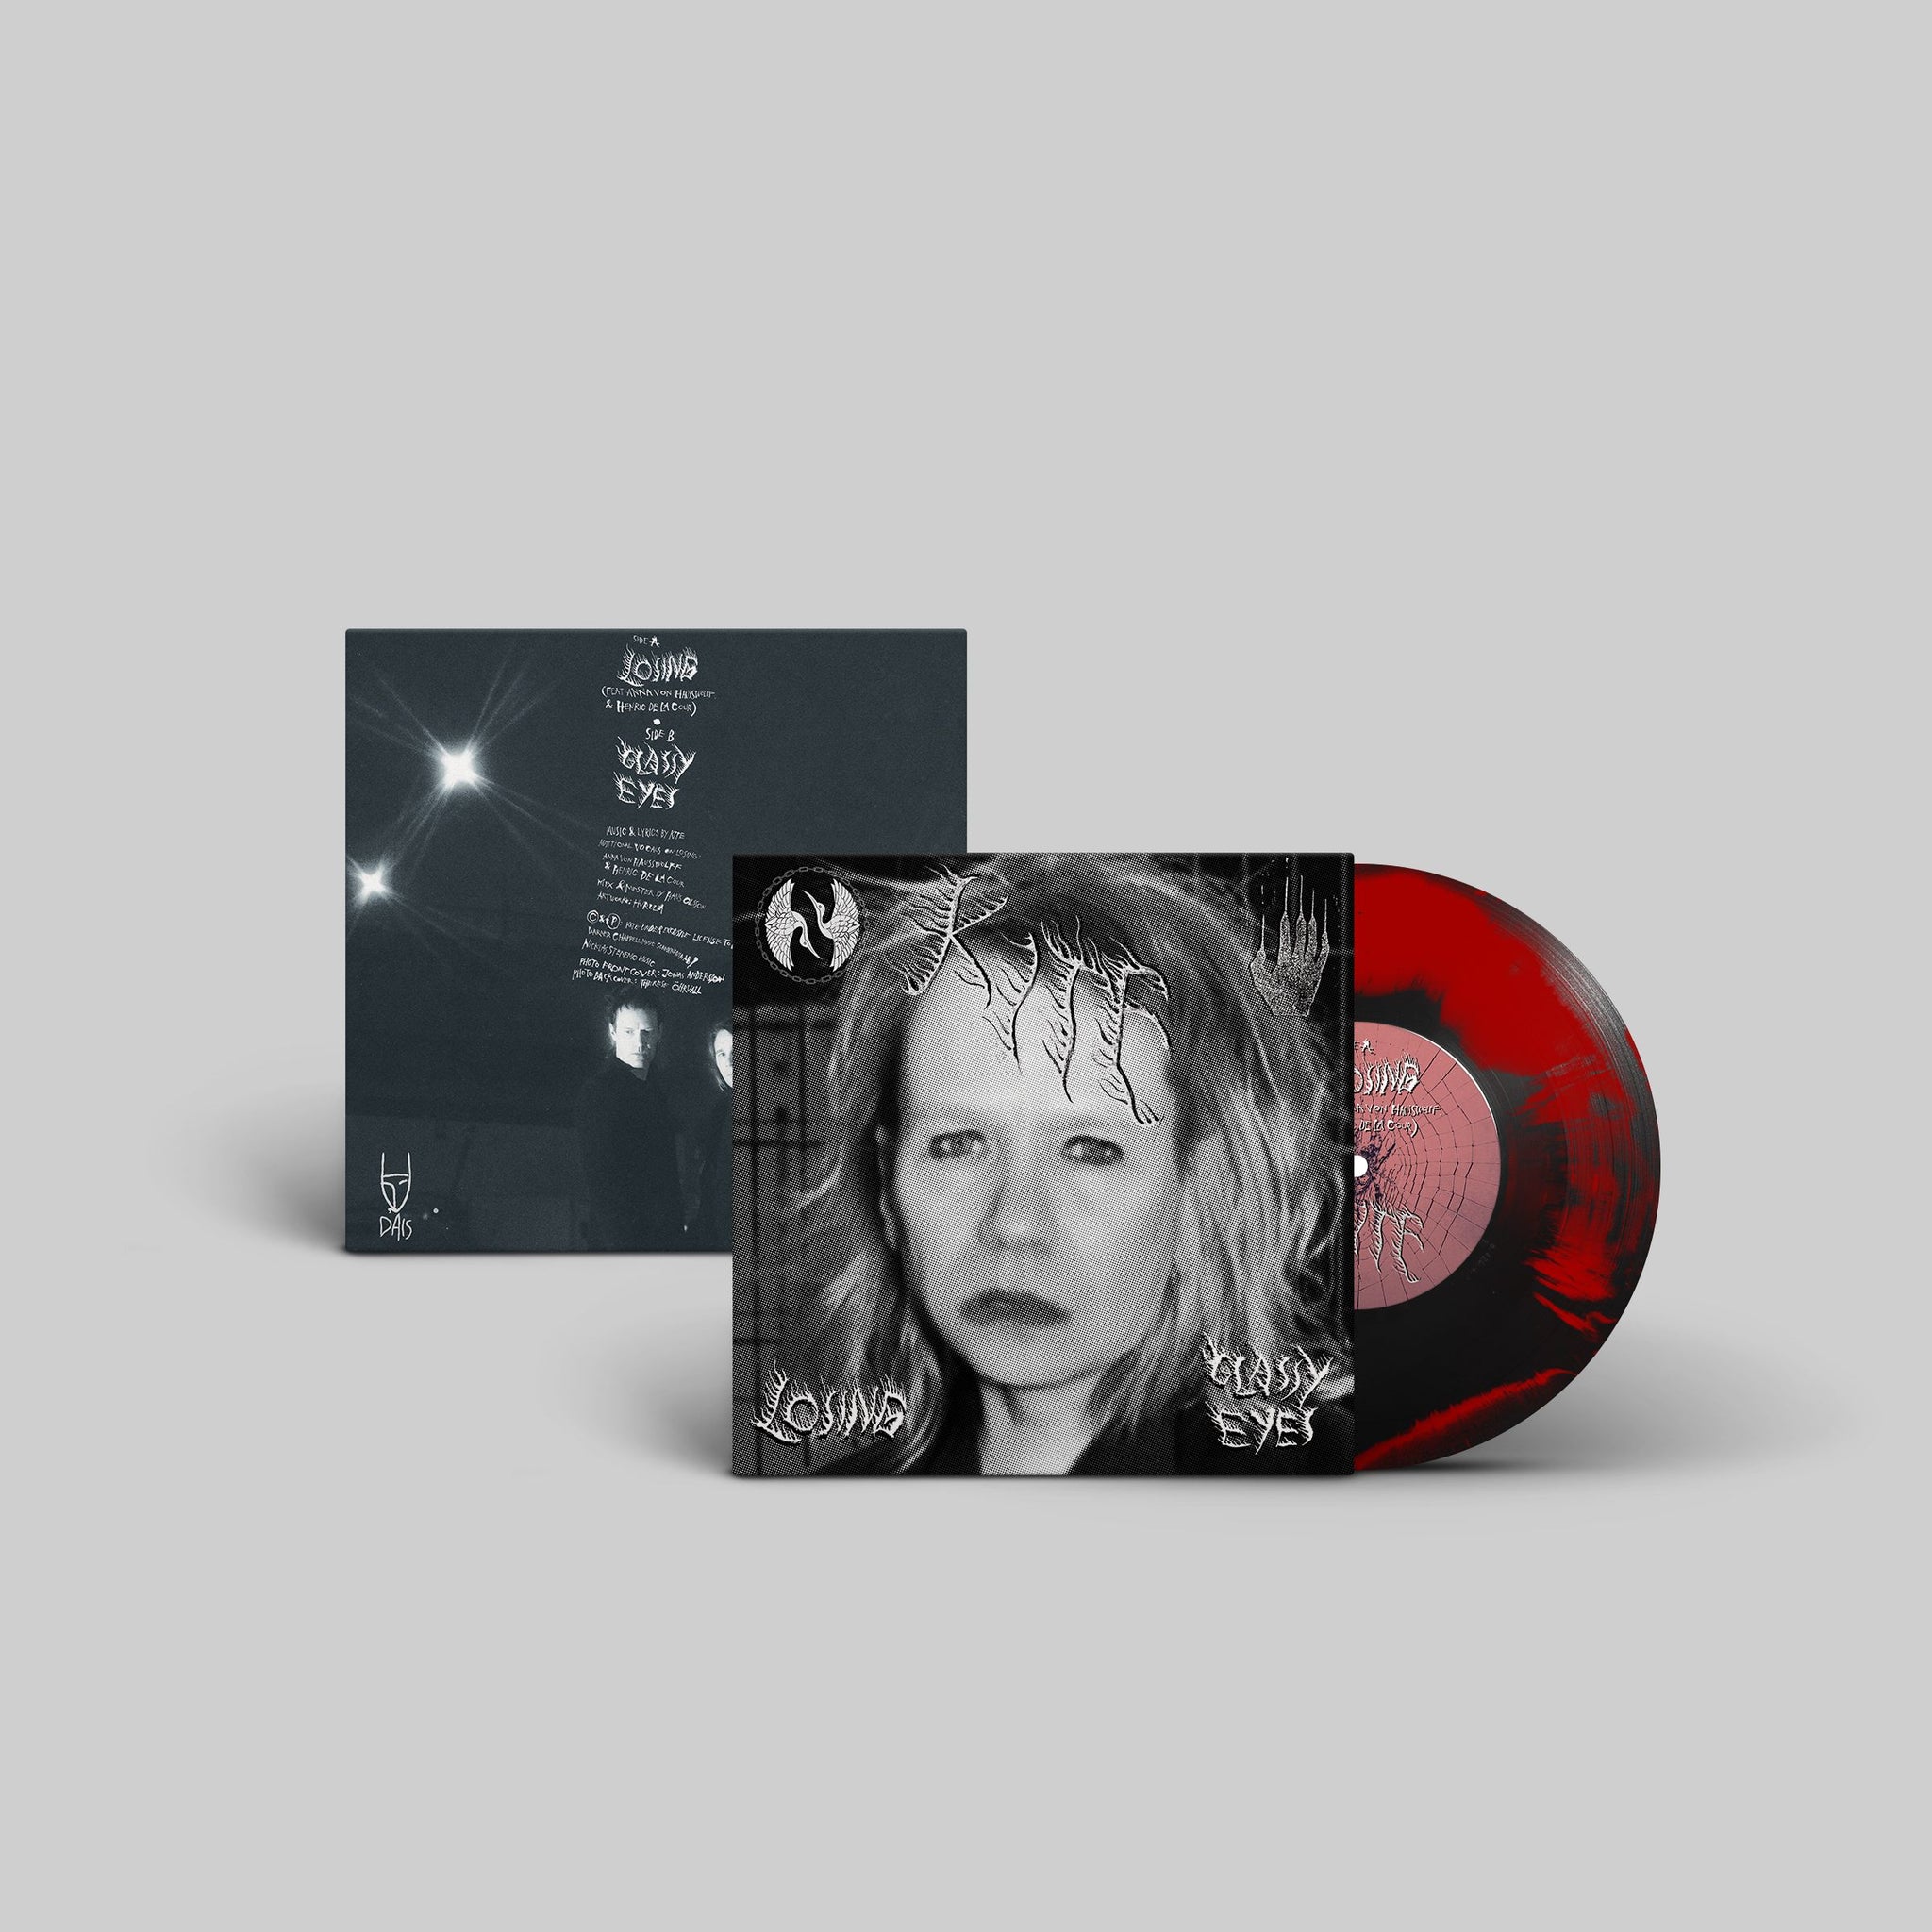 Losing / Glassy Eyes - Opaque Black / Red Smash 7" vinyl (Kite shop exclusive)